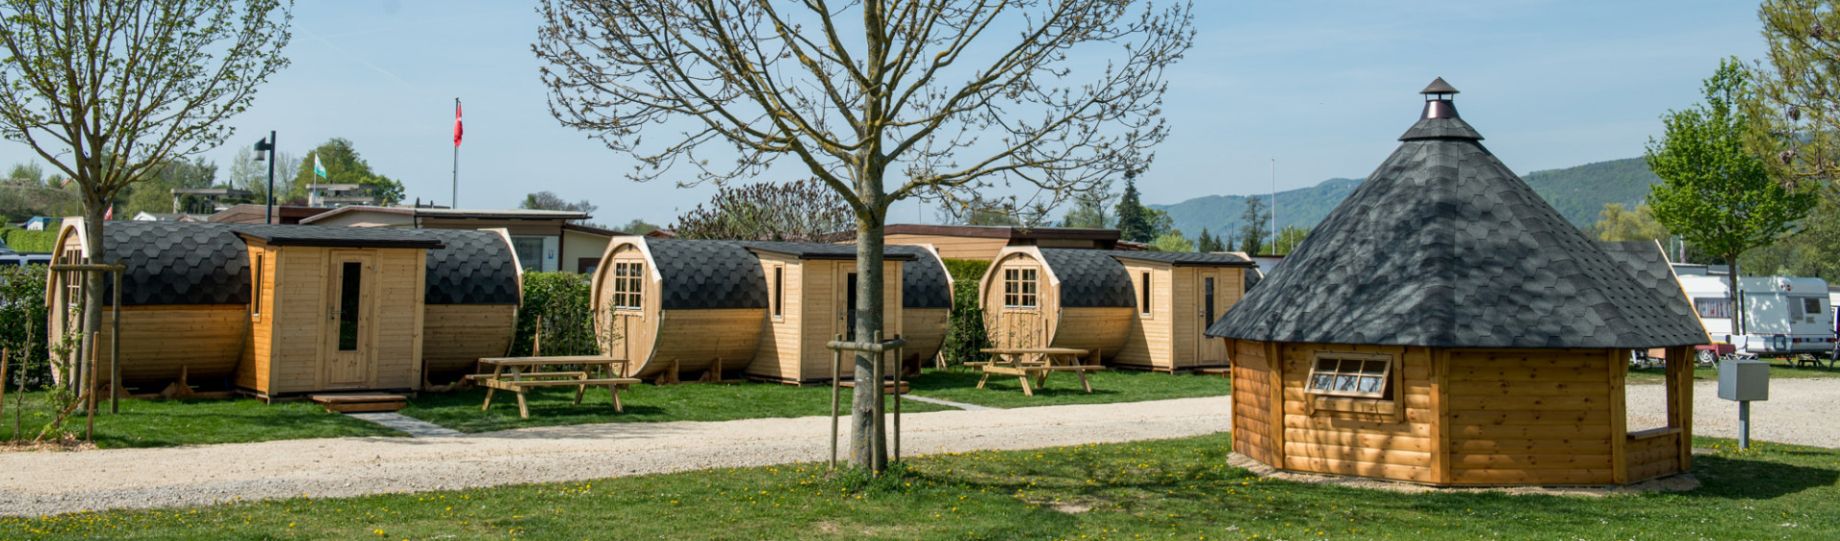 city of Barrel-shaped cabins